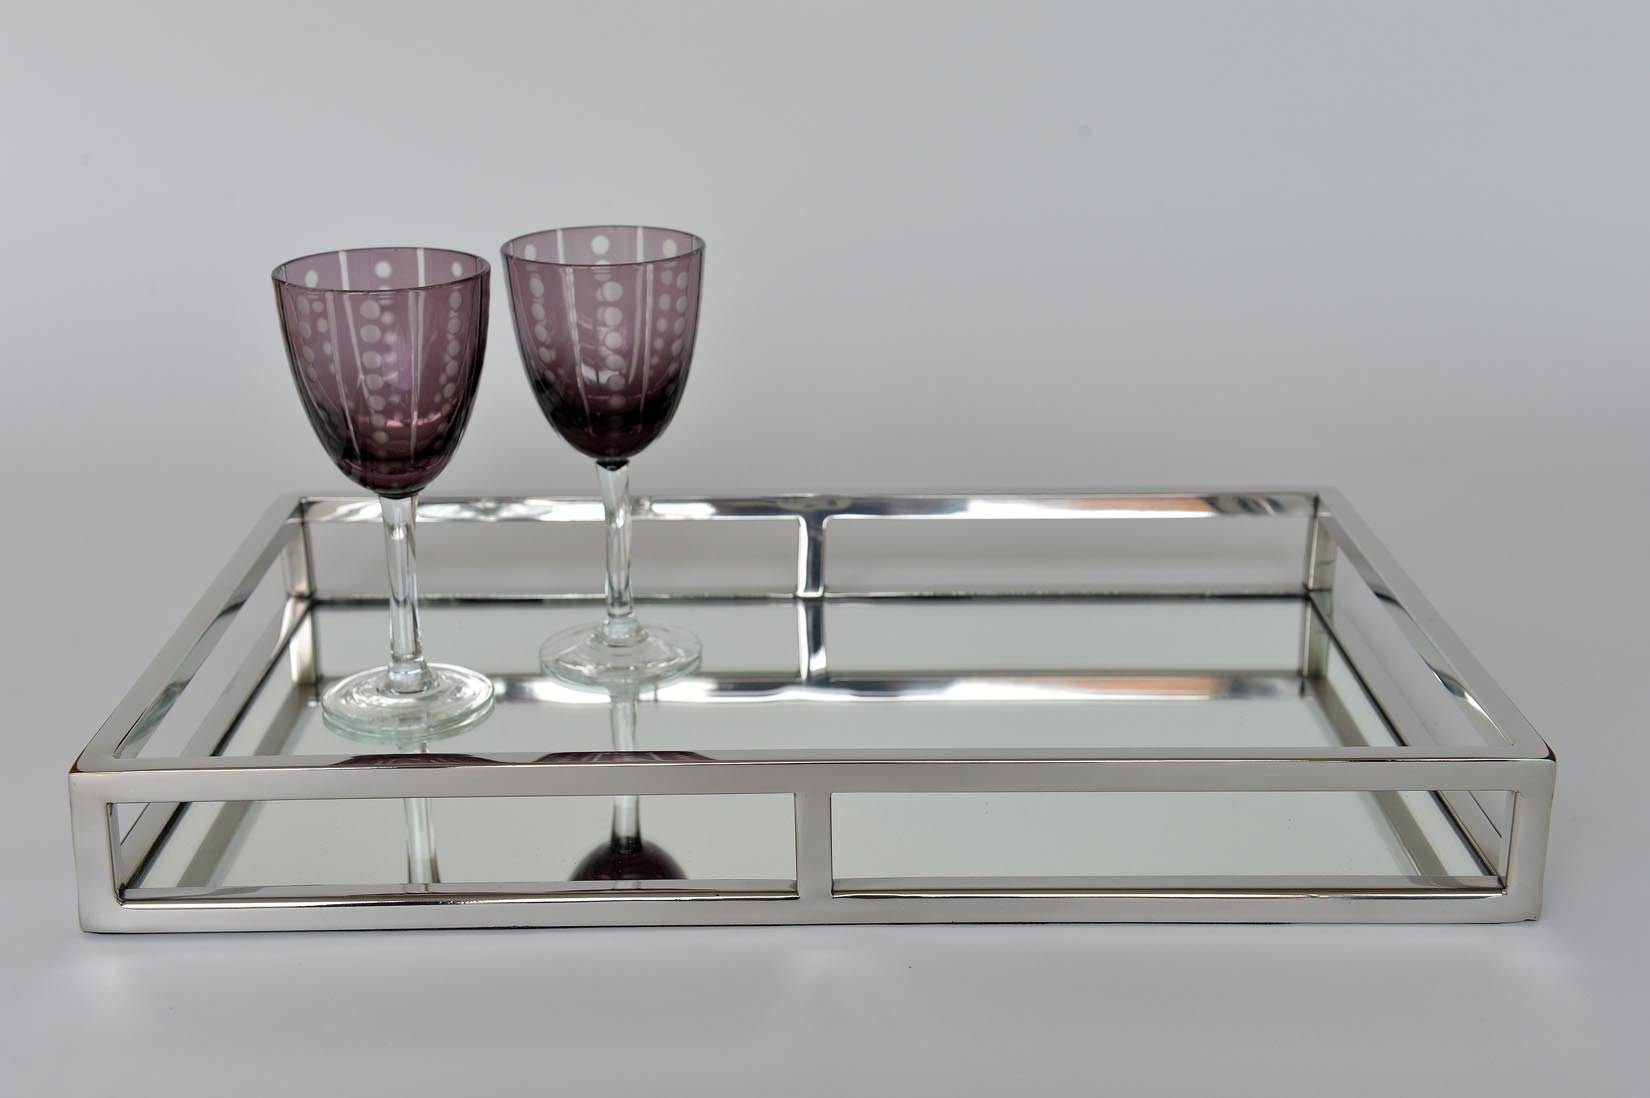 Pair of urchin-footed wine glasses - Natalia Willmott